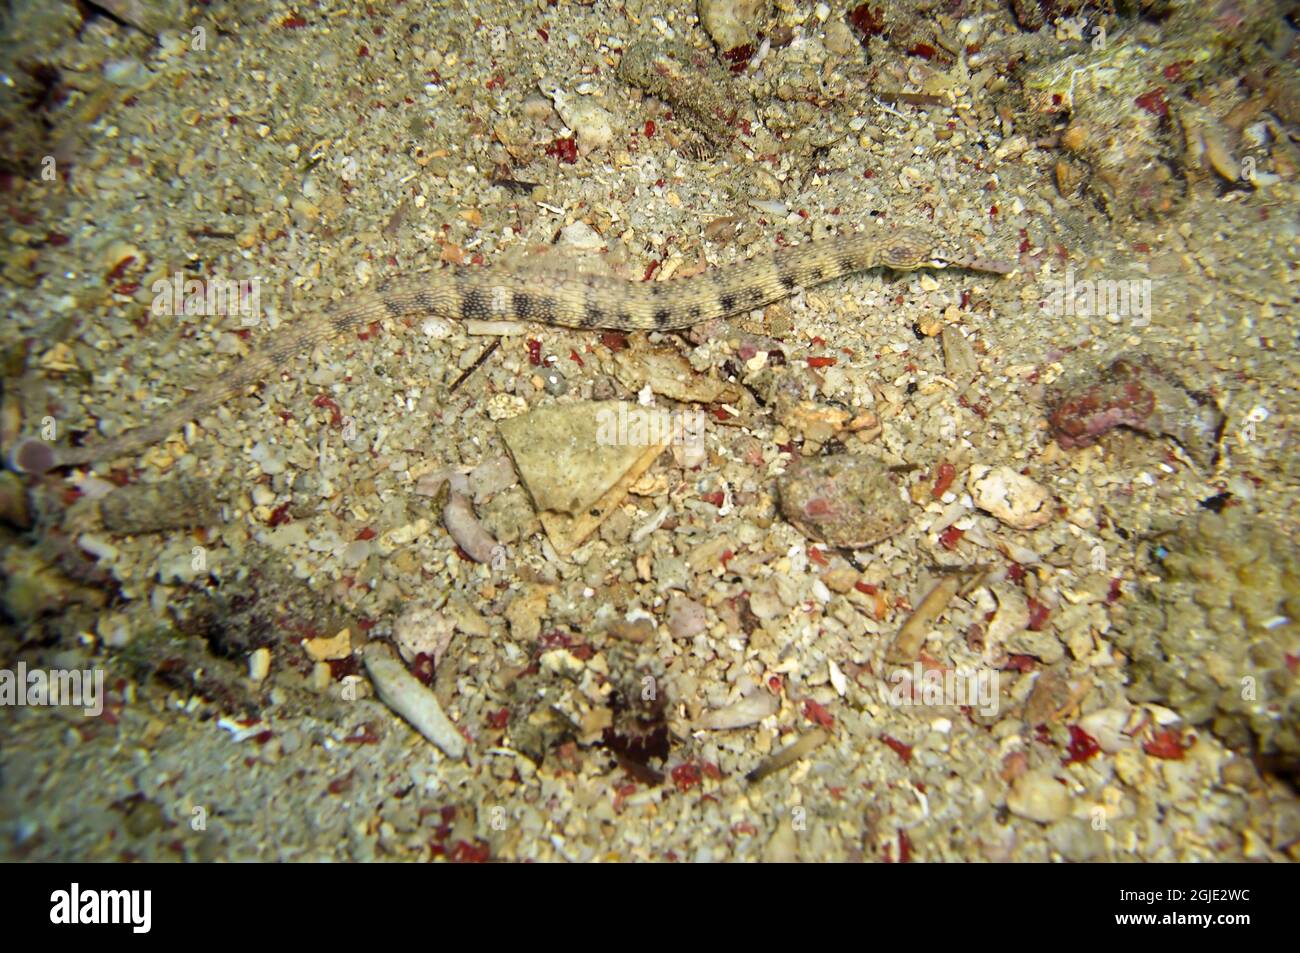 Pipefish (Doryrhamphus) swims in the filipino sea January 13, 2012 Stock Photo